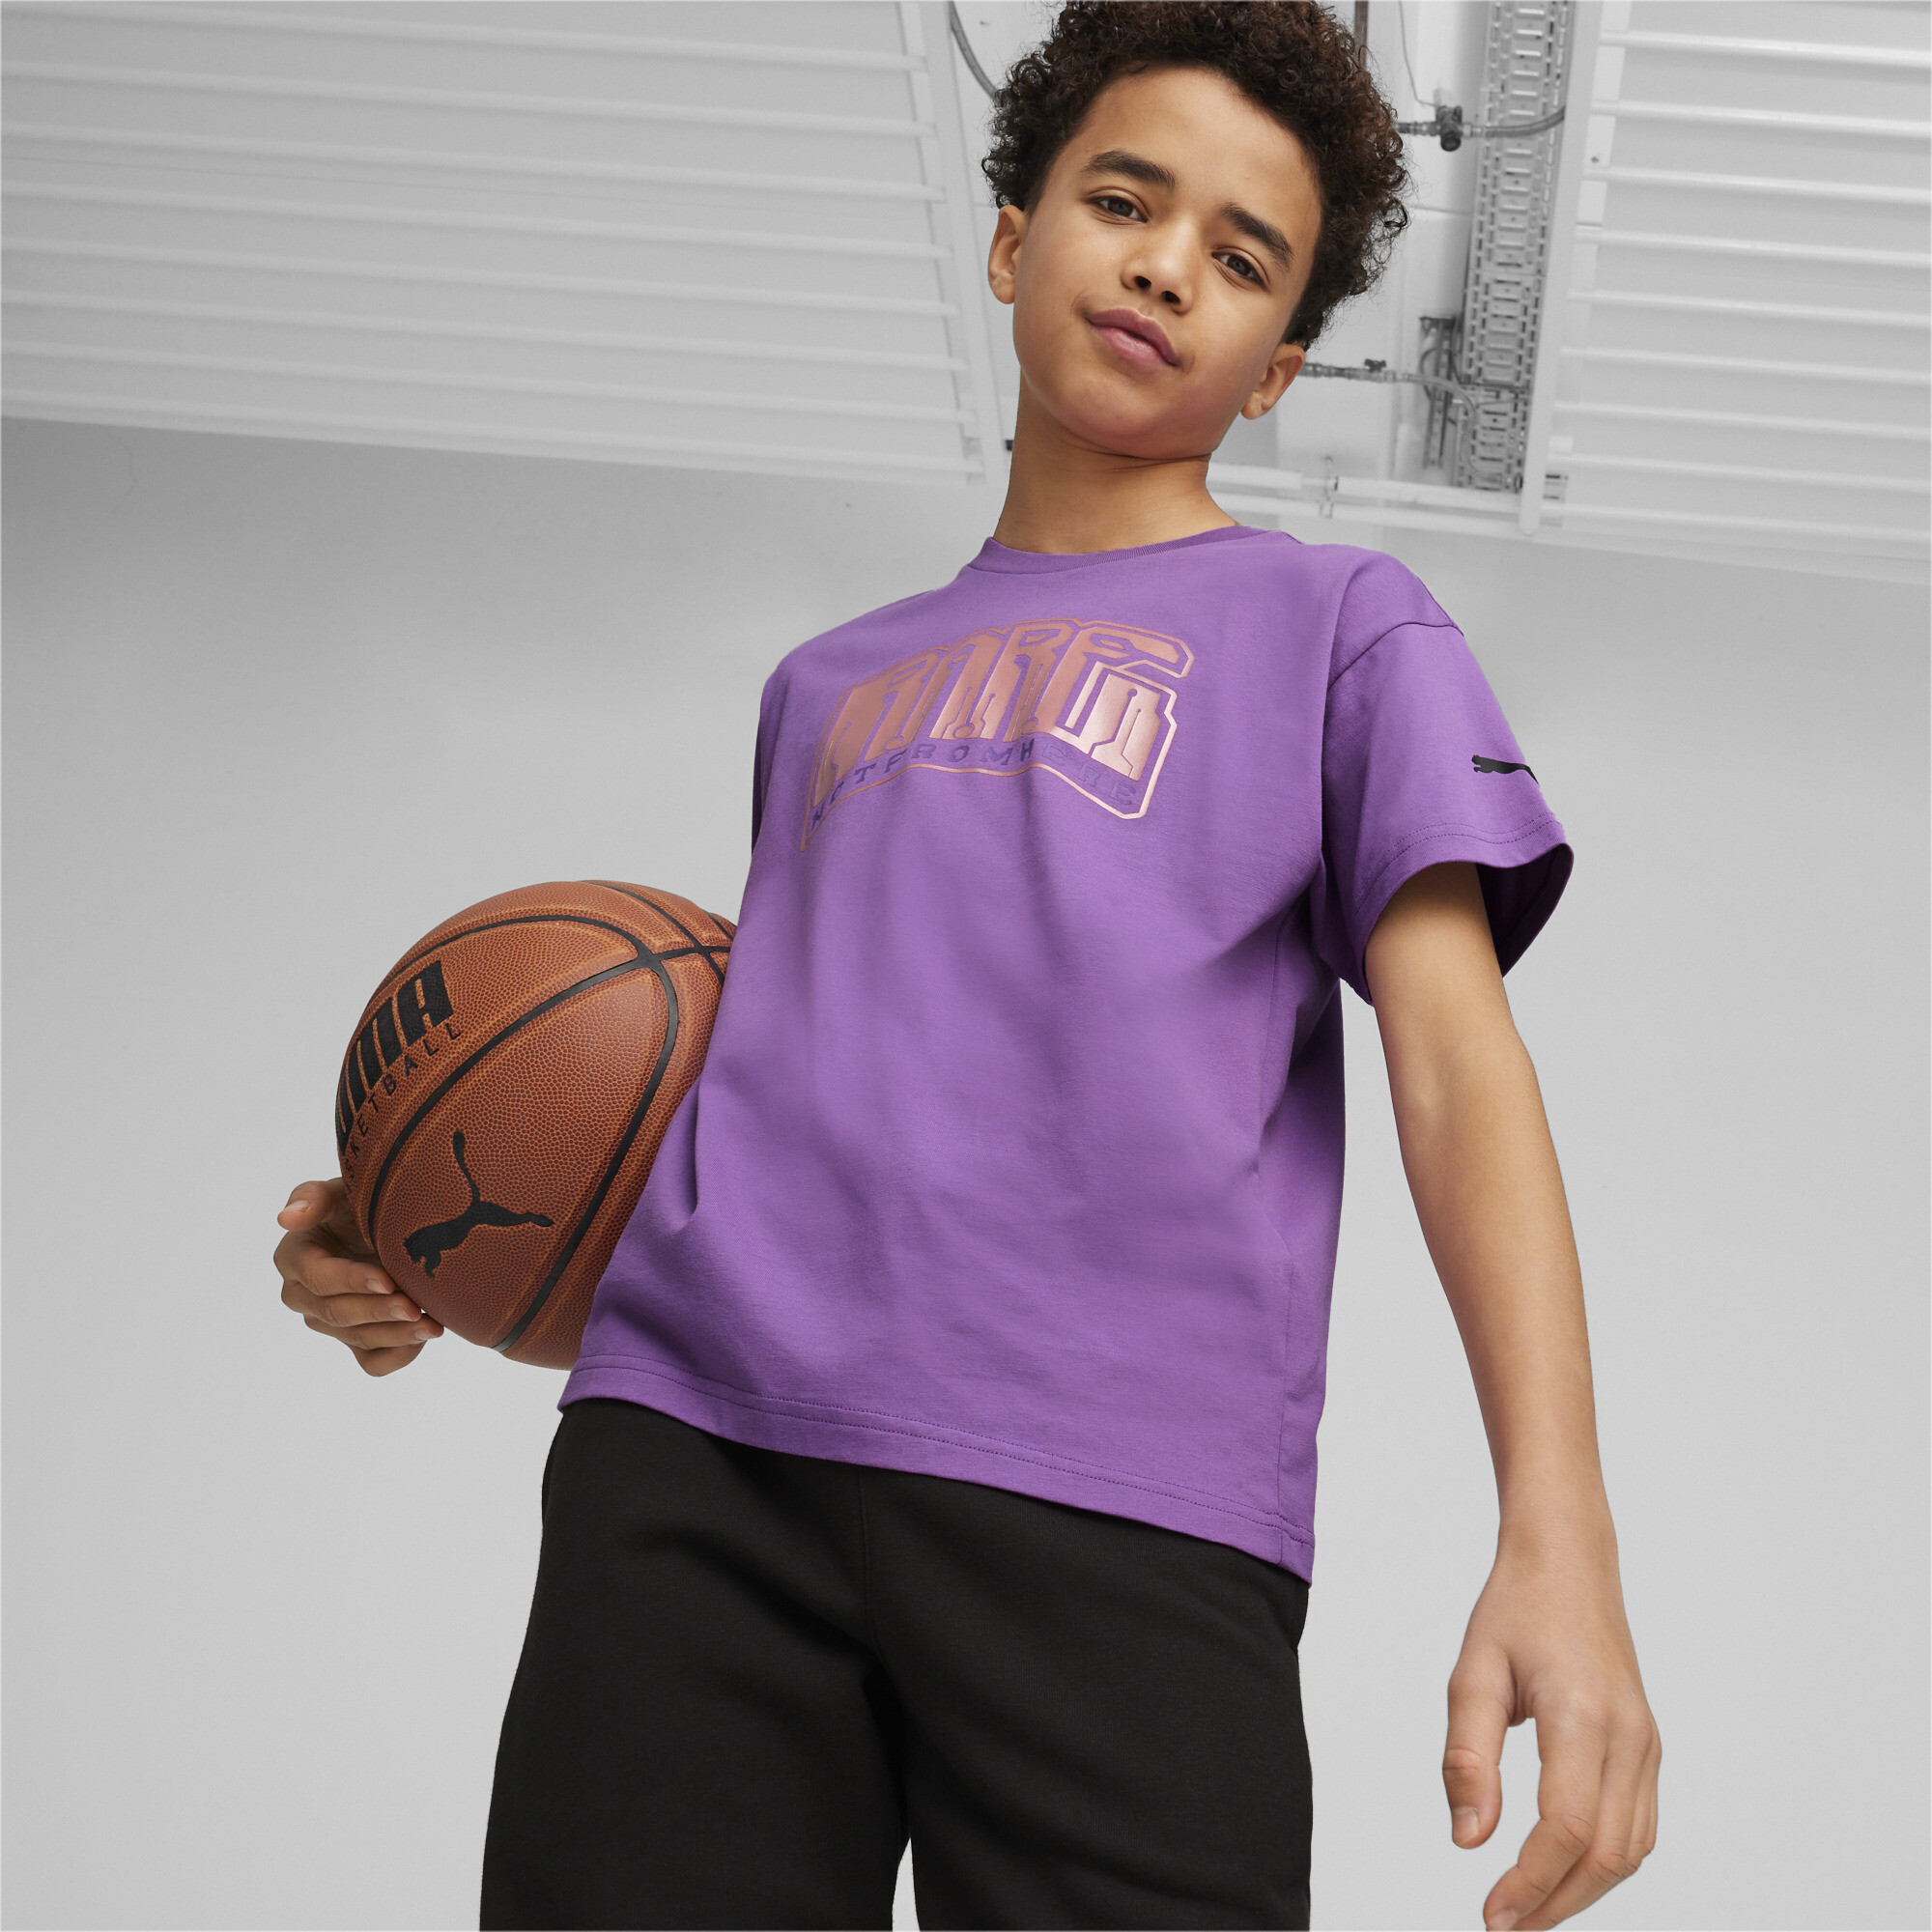 Puma MELO IRIDESCENT Boys' T-Shirt, Purple, Size 9-10Y, Age